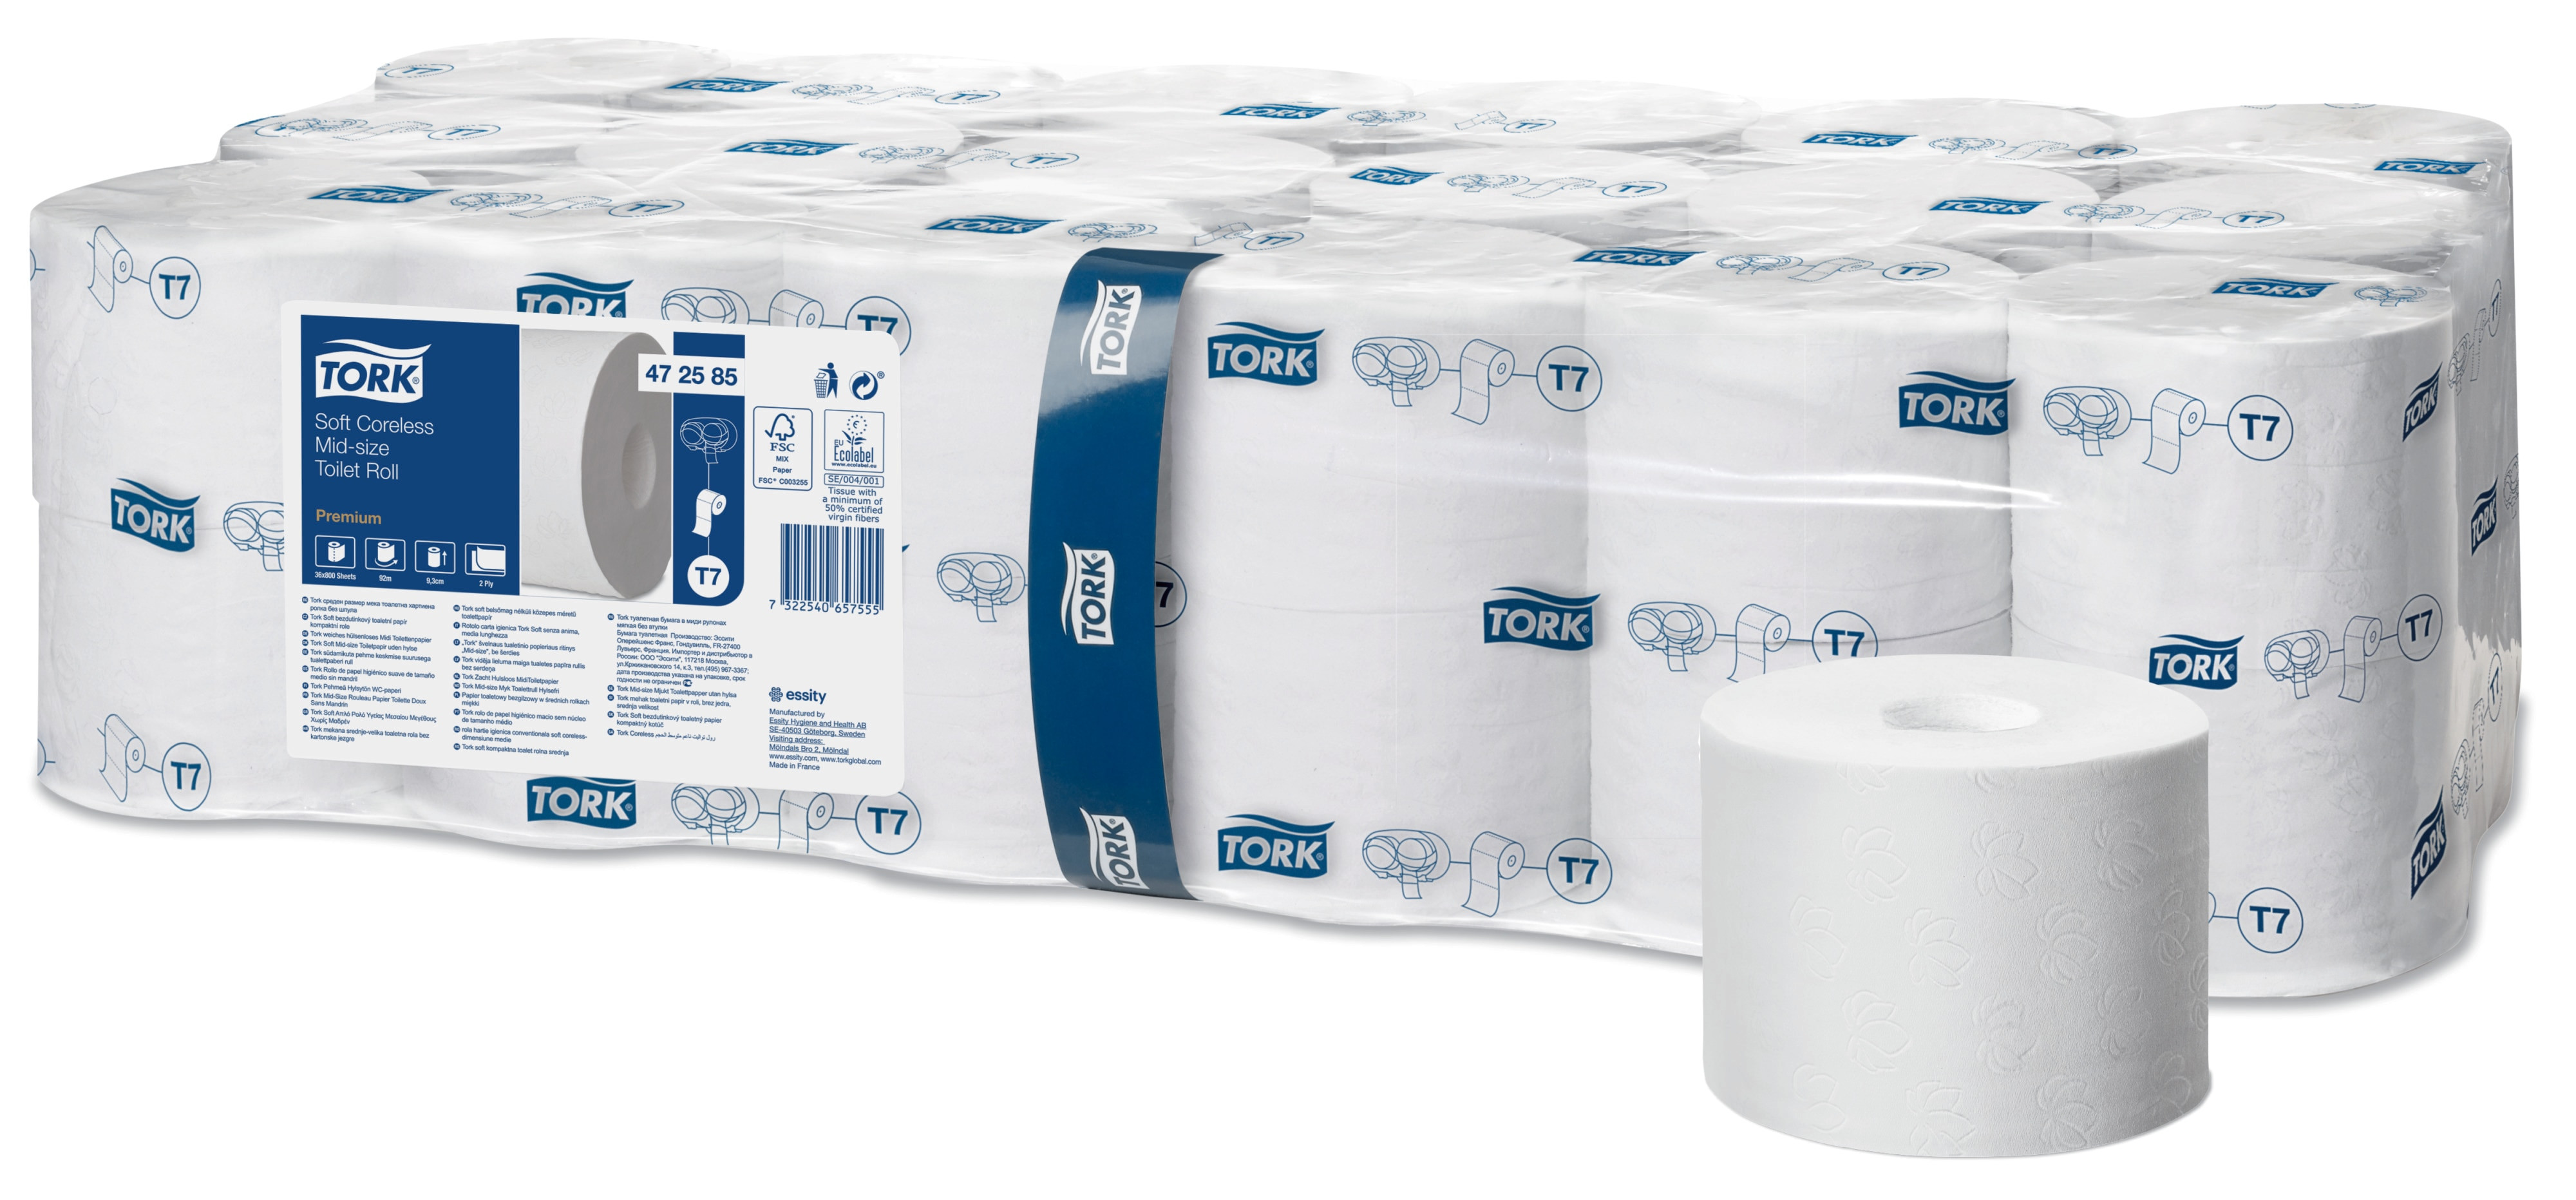 TORK toiletpapier 2-laags 36rol 800vel T7 wit 472585 (Default)